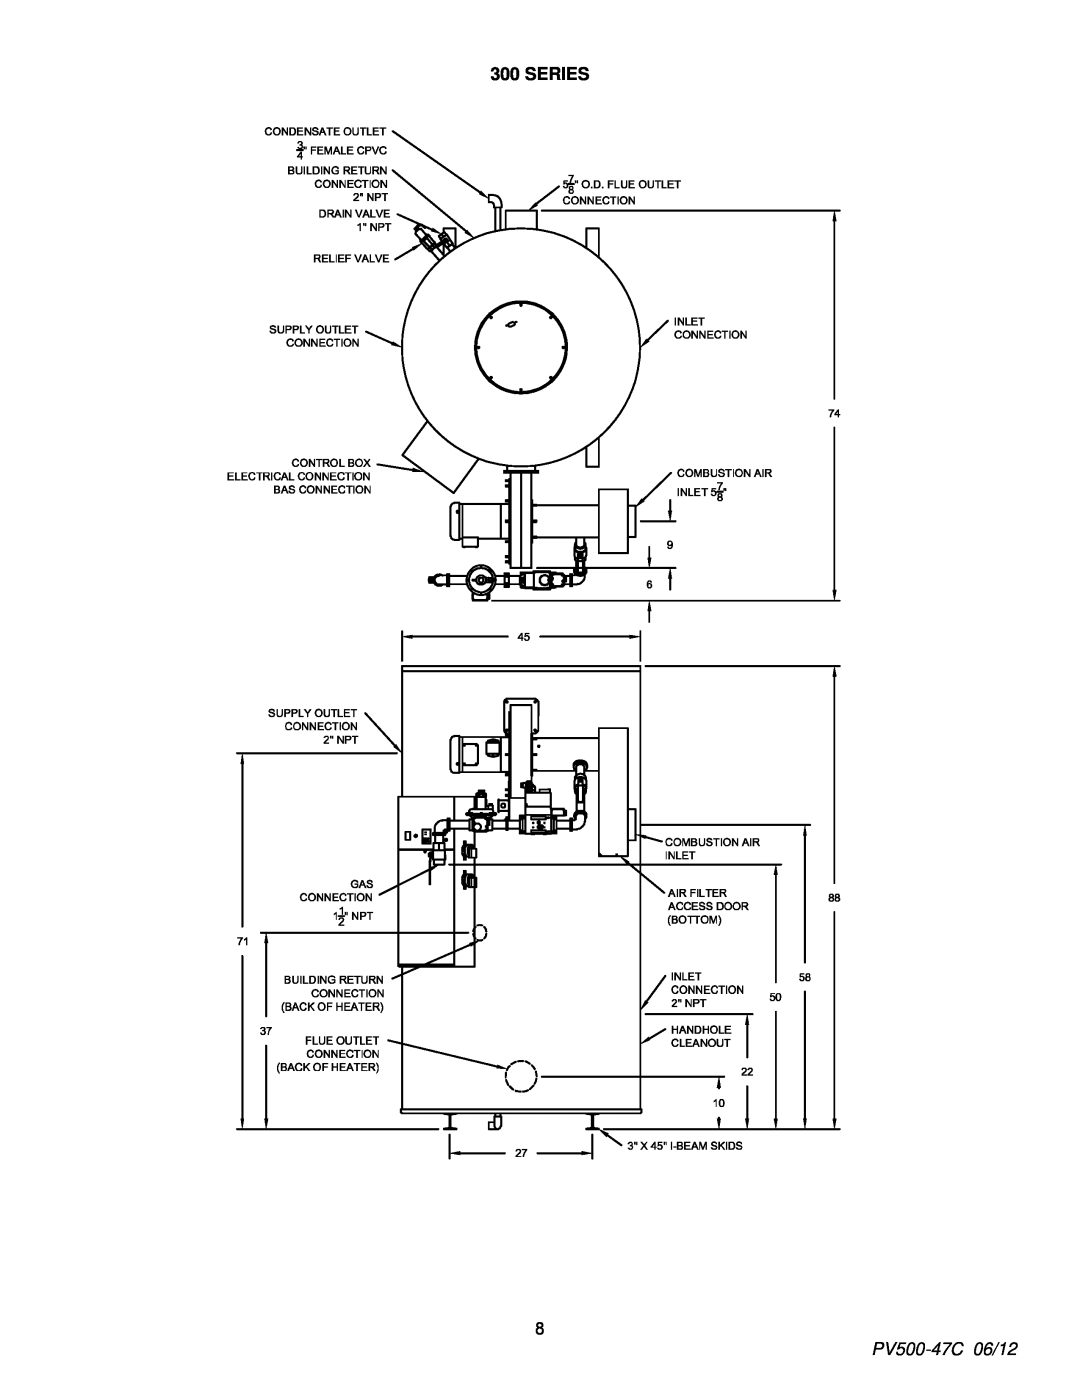 PVI Industries manual Series, PV500-47C06/12 